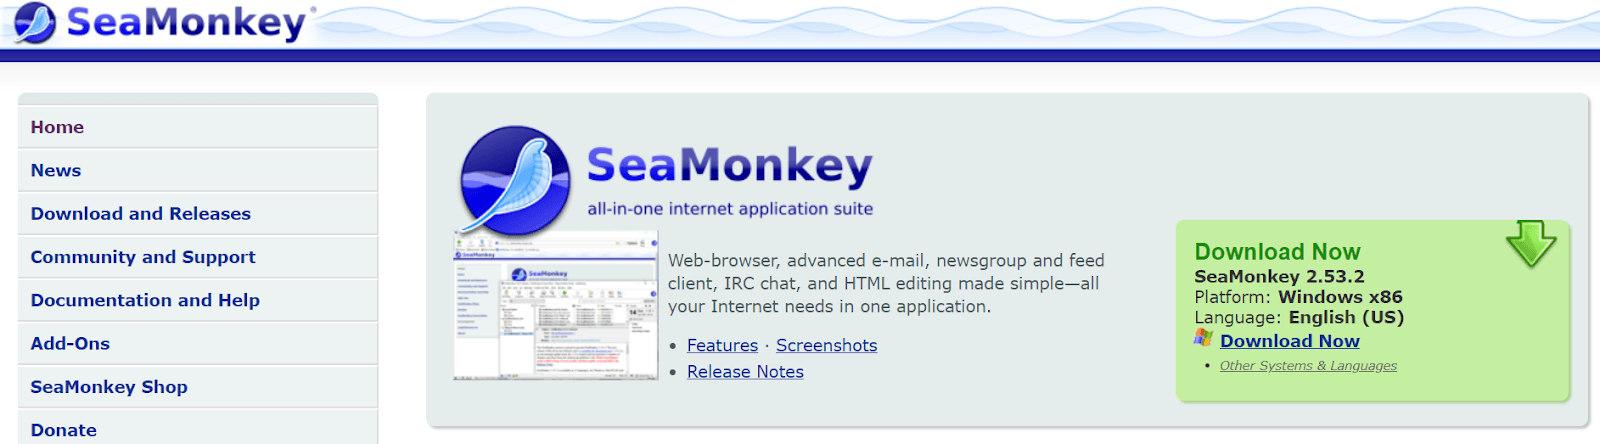 SeaMonkey - Lightweight Browser For Windows 